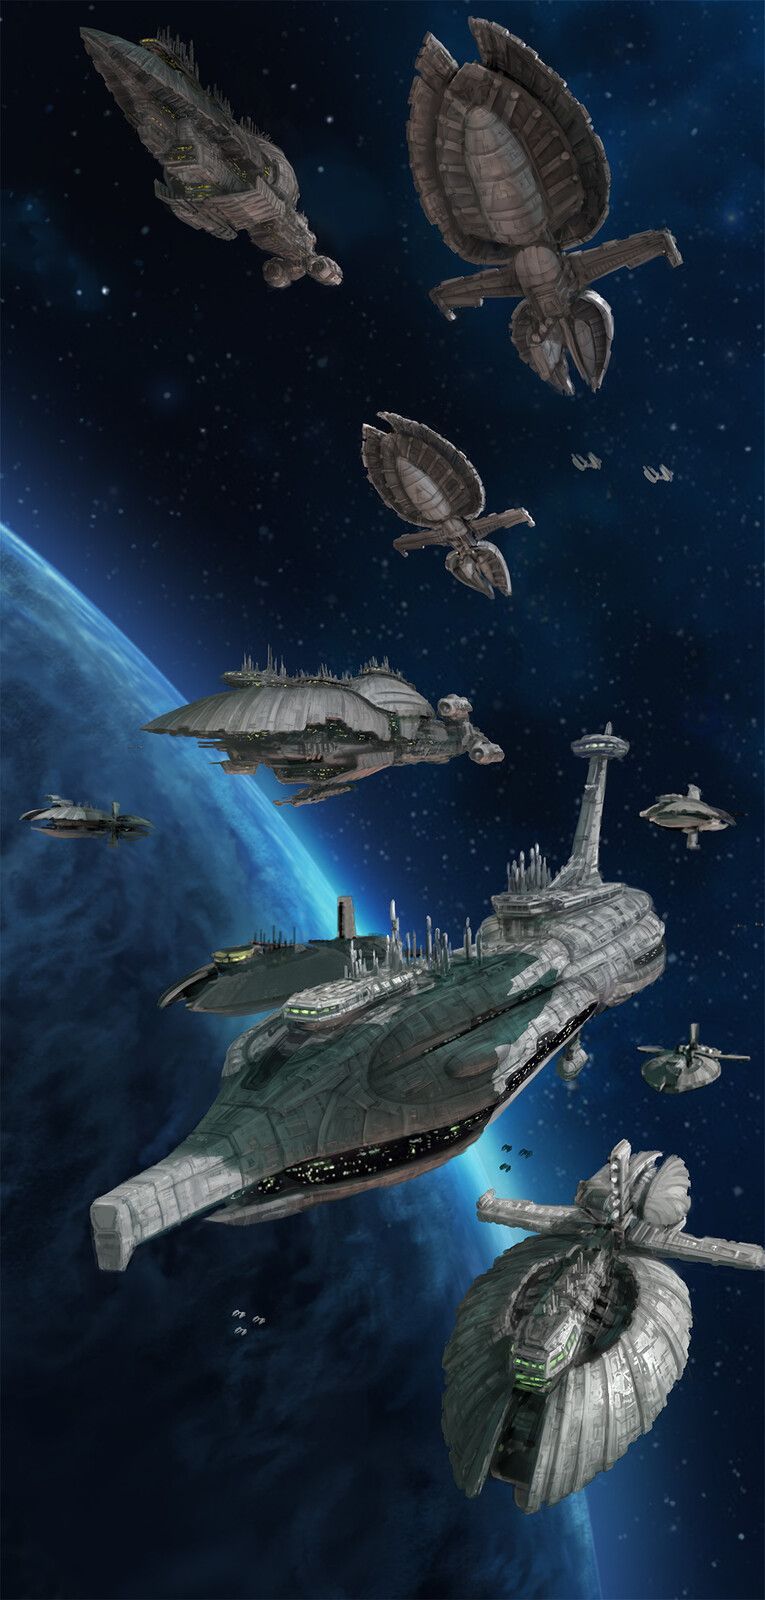 Sci Fi And Fantasy Art. Star Wars Ships, Star Wars Rpg, Star Wars Spaceships